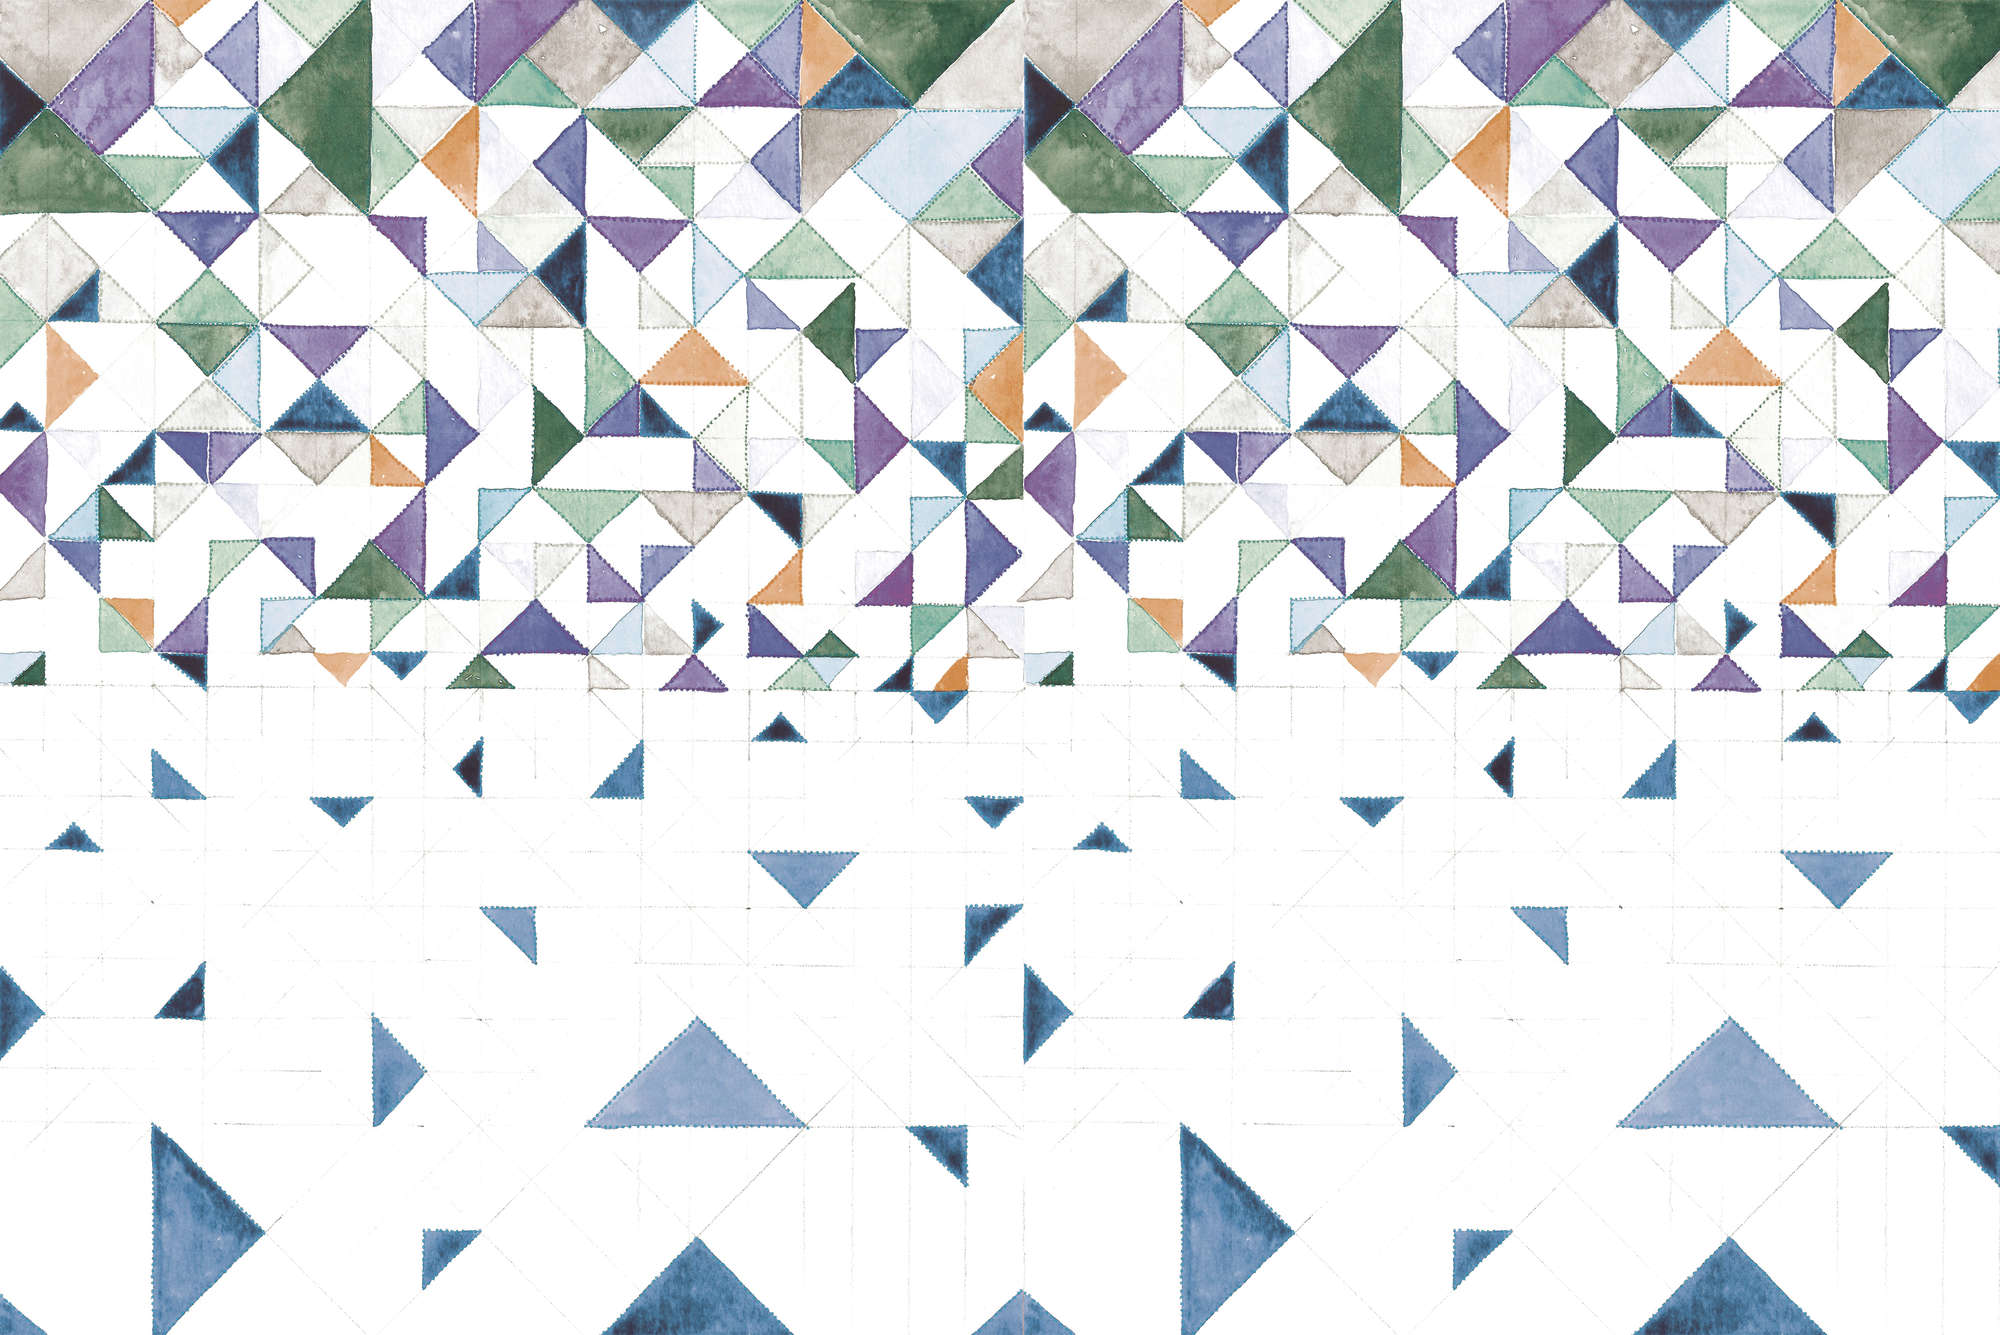             Grafisch behang met driehoekpatroon op parelmoer glad vlies
        